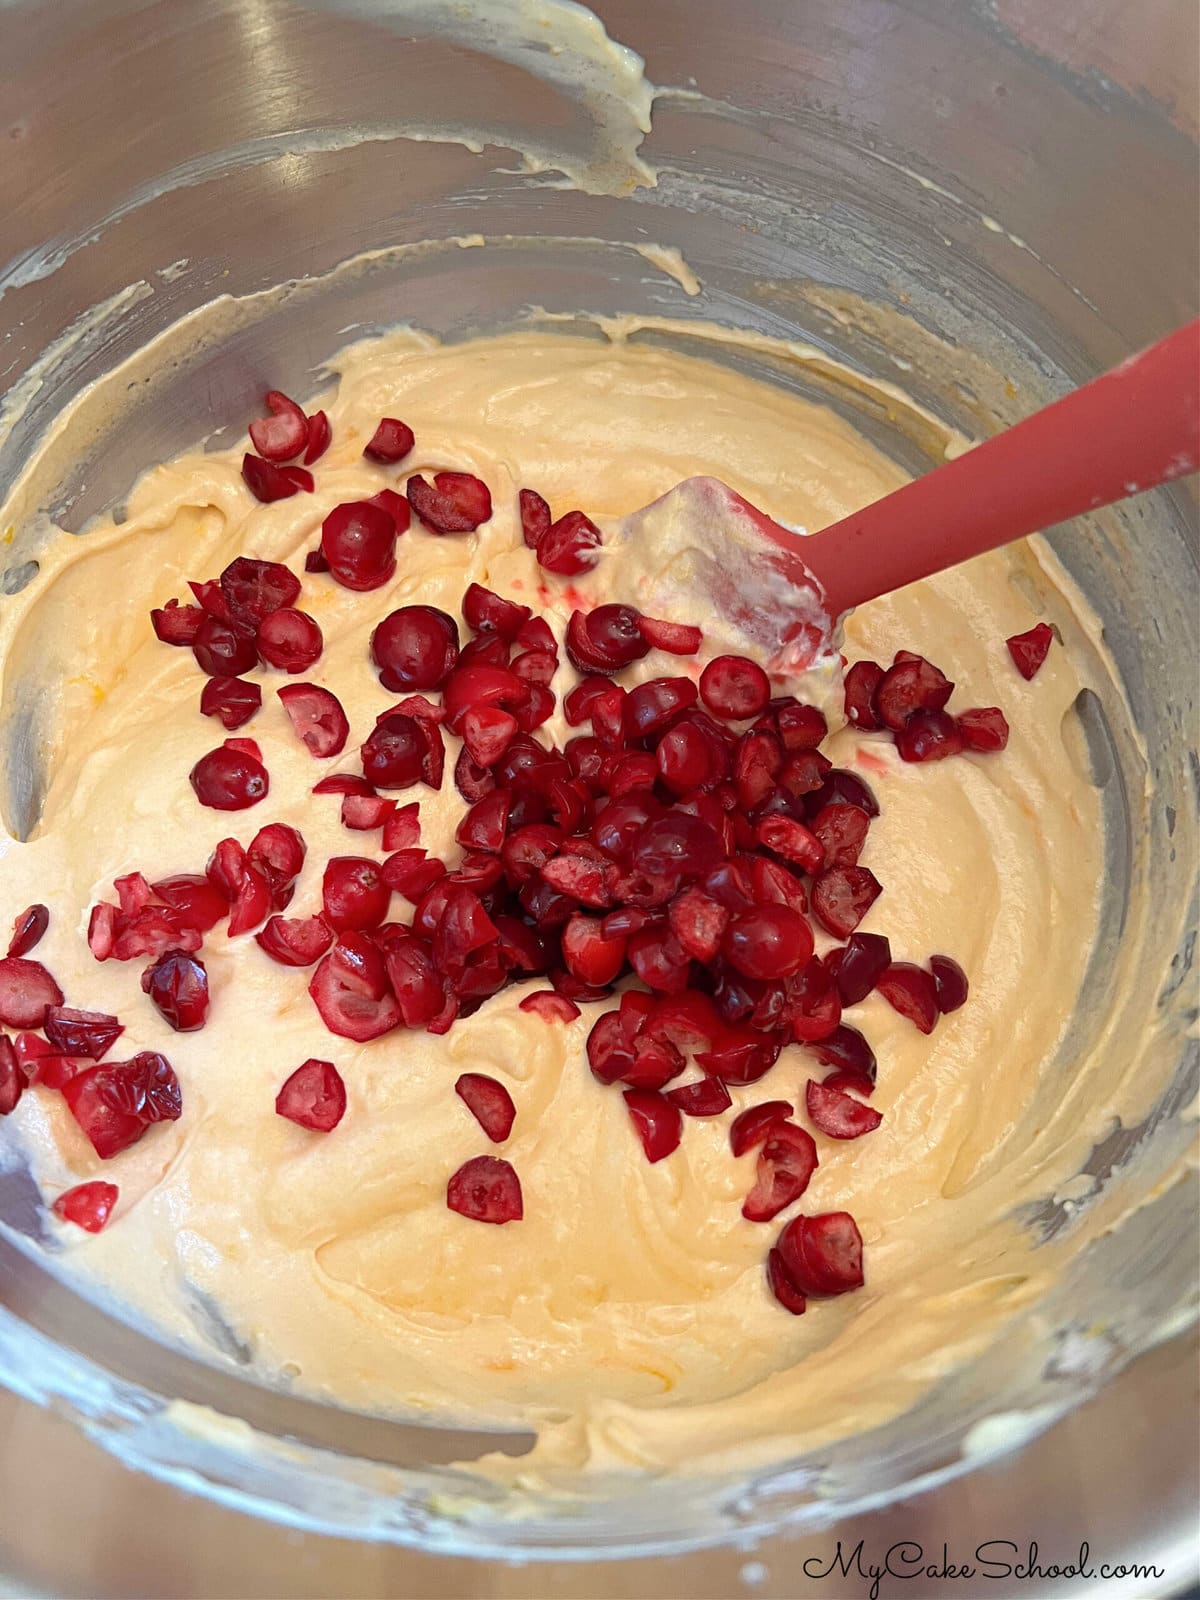 Adding cranberries to Orange Cake Batter.